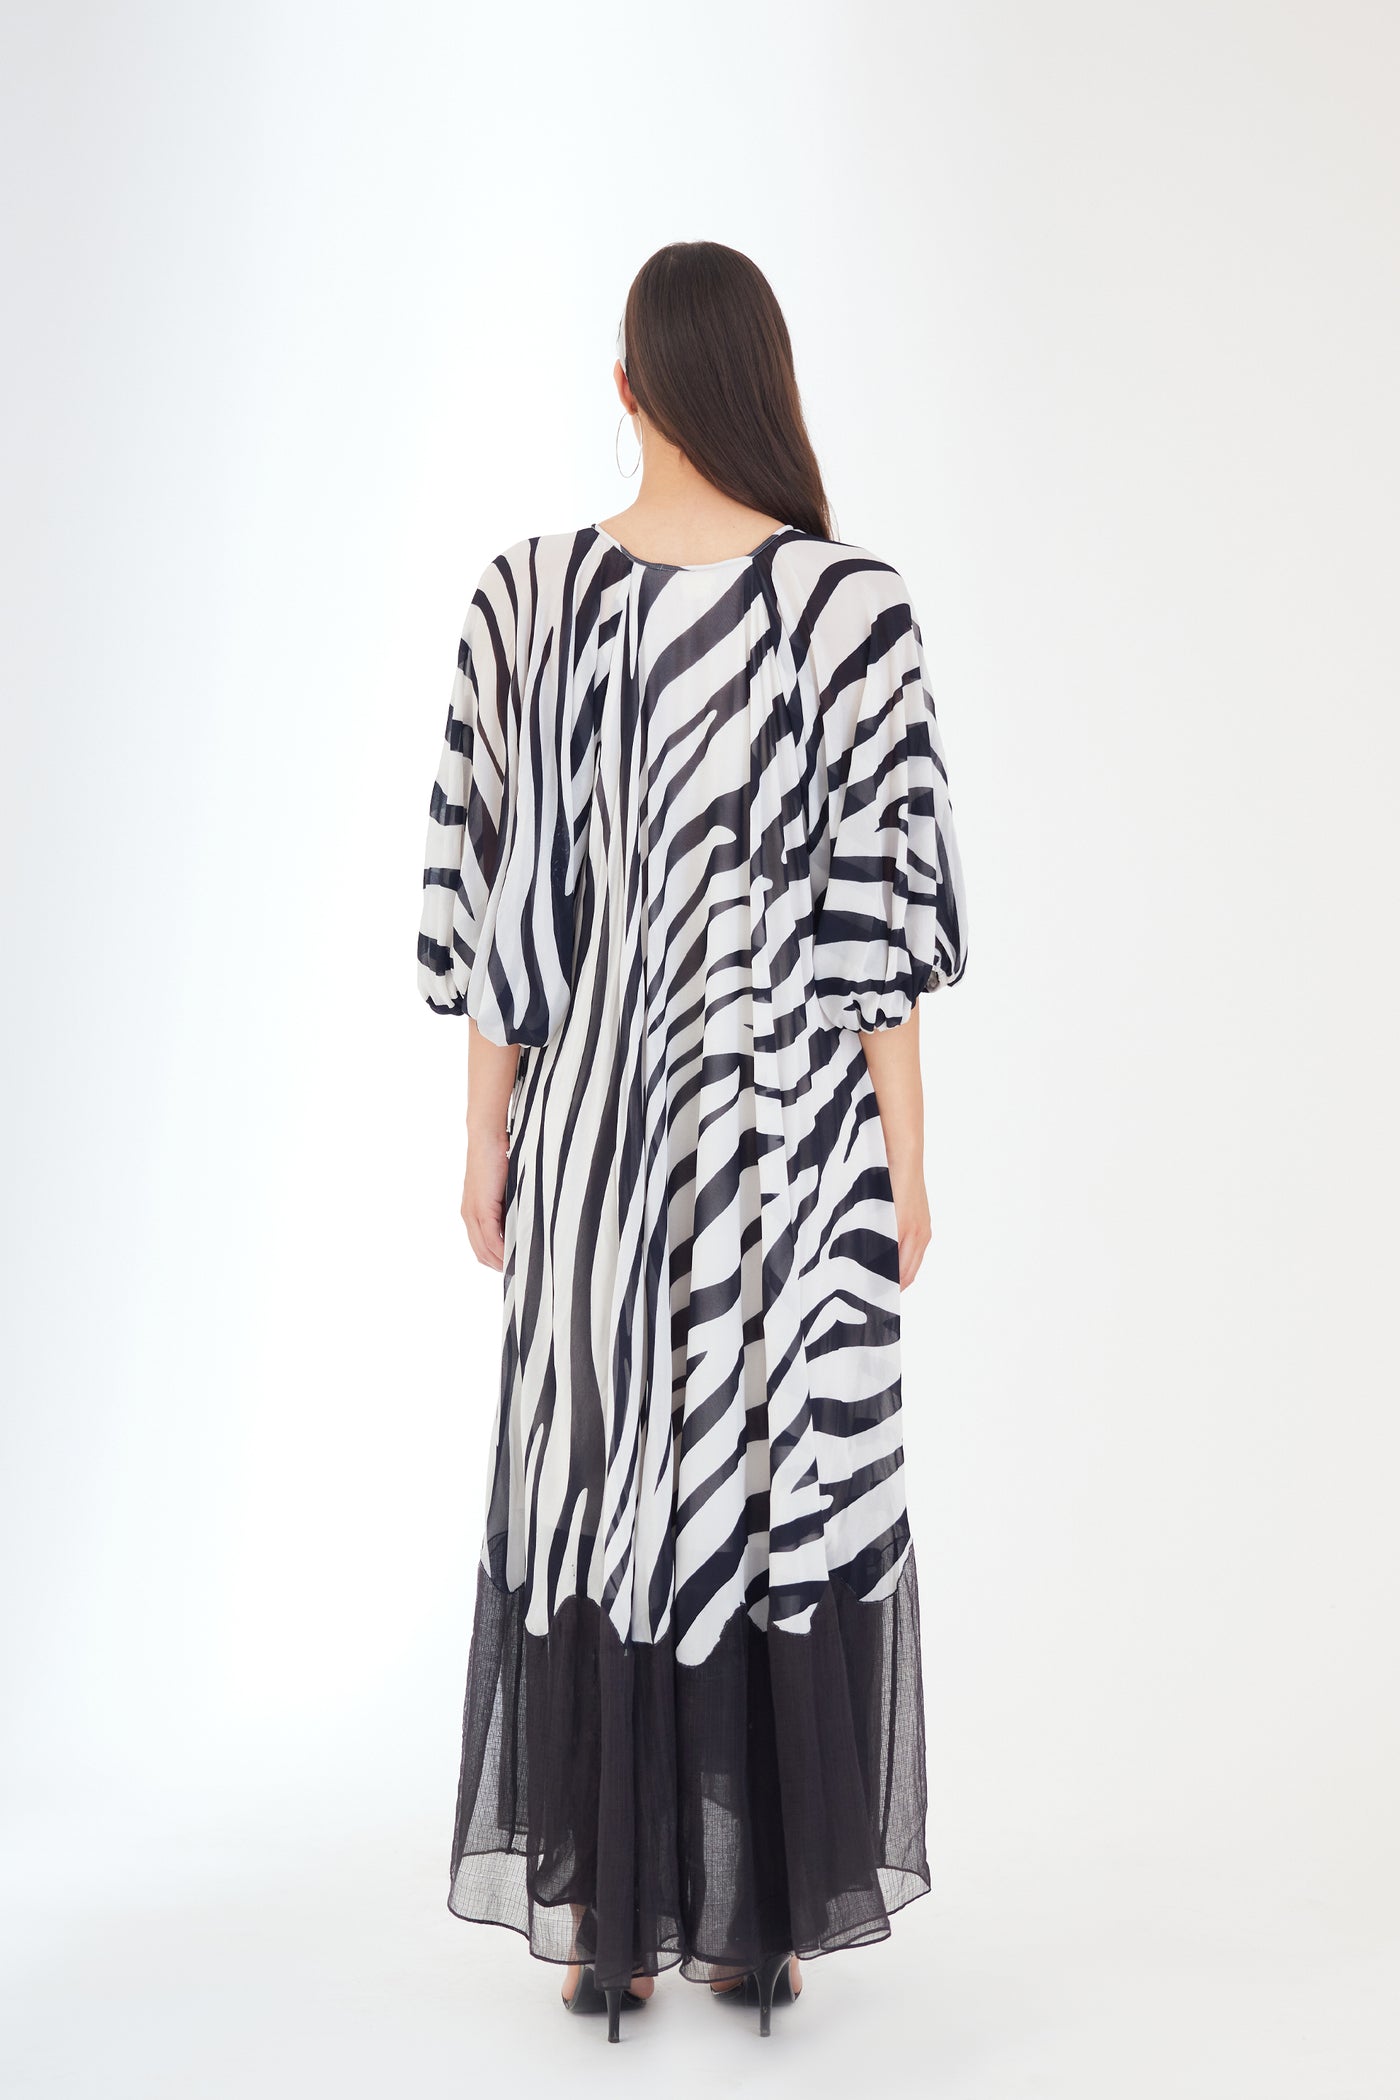 Nikasha Black And White Tassels Maxi Dress designer wear online shopping melange singapore